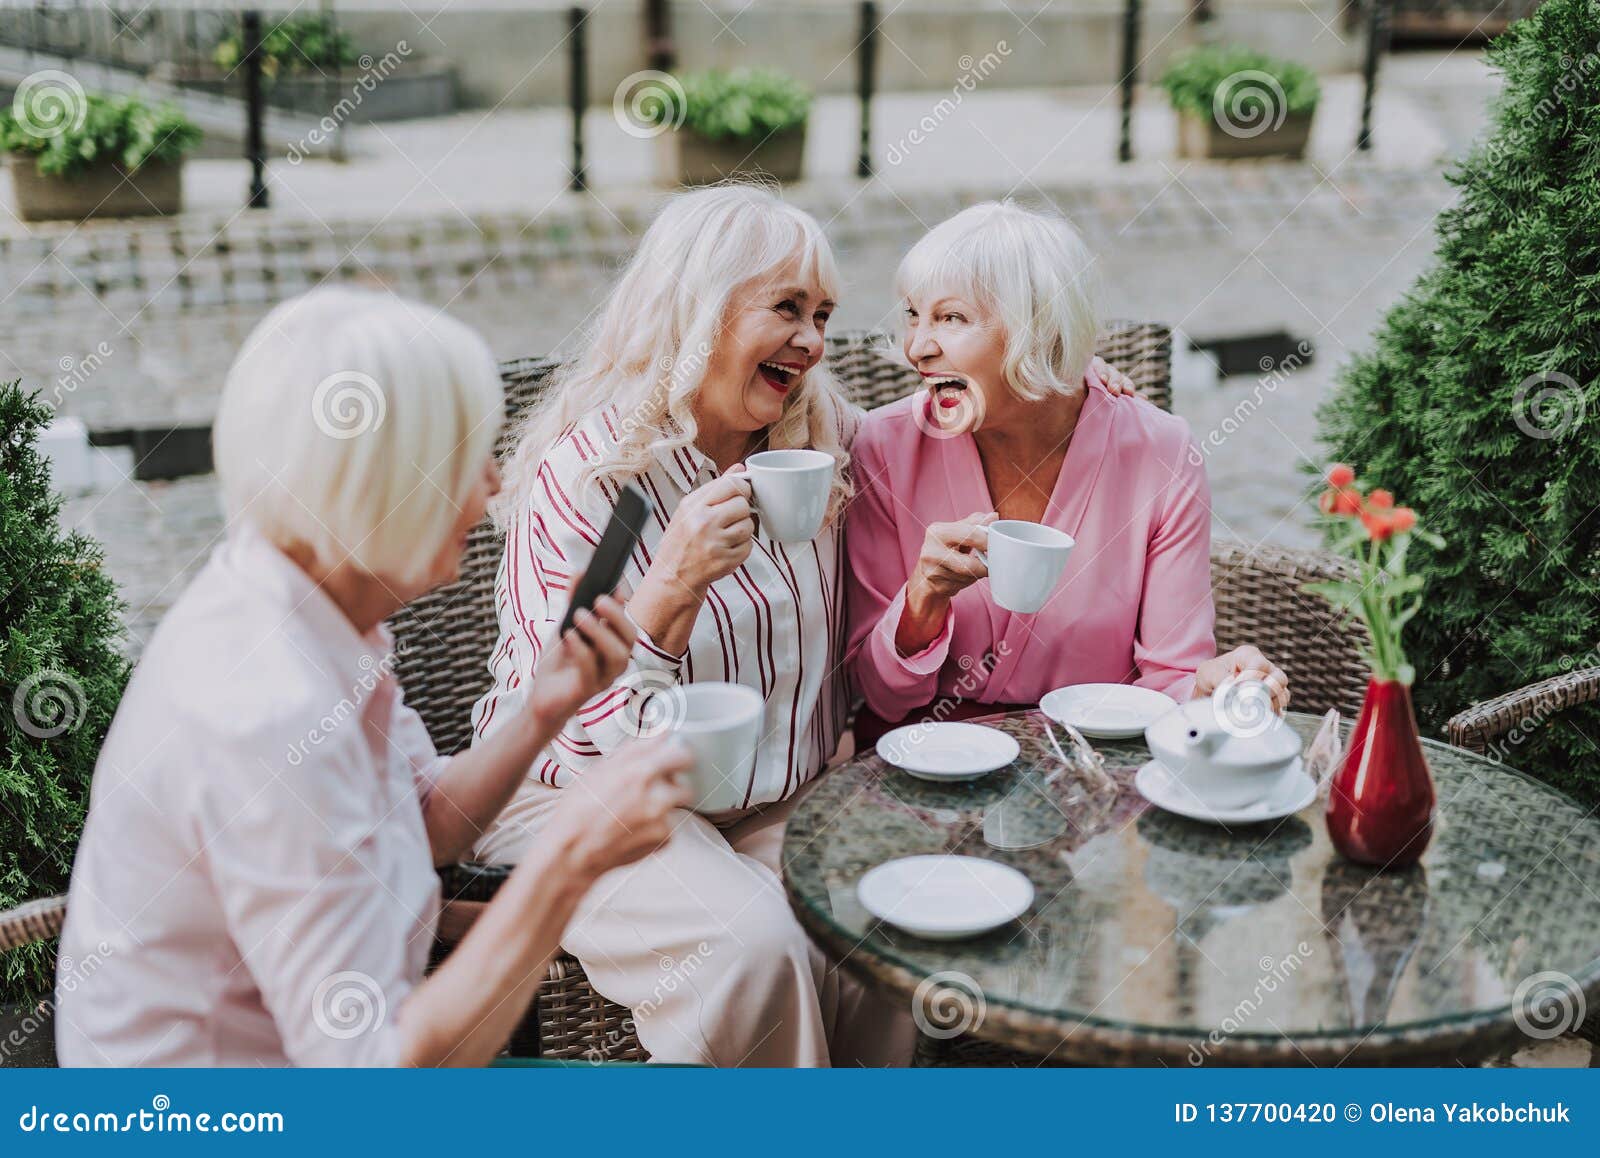 older women fun pics